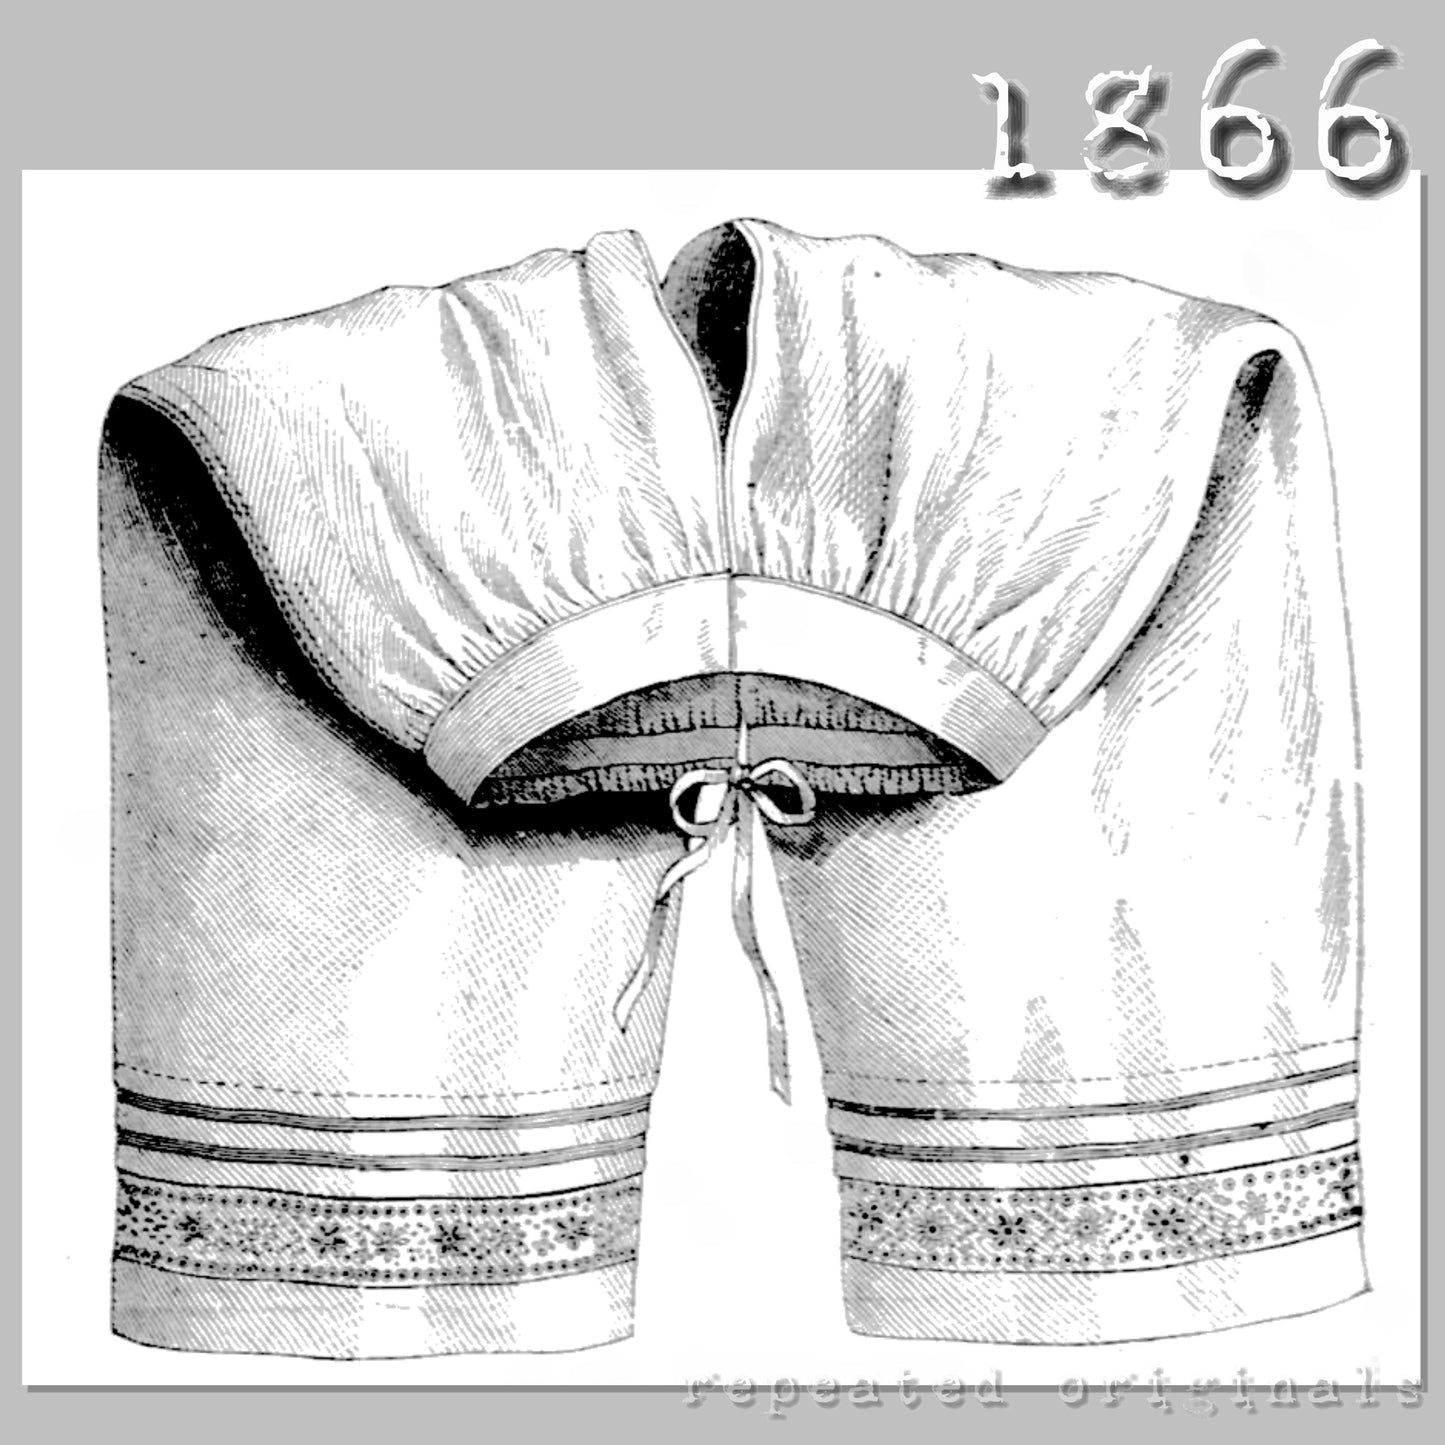 1866 Ladies' Pantaloons Sewing Pattern - INSTANT DOWNLOAD PDF